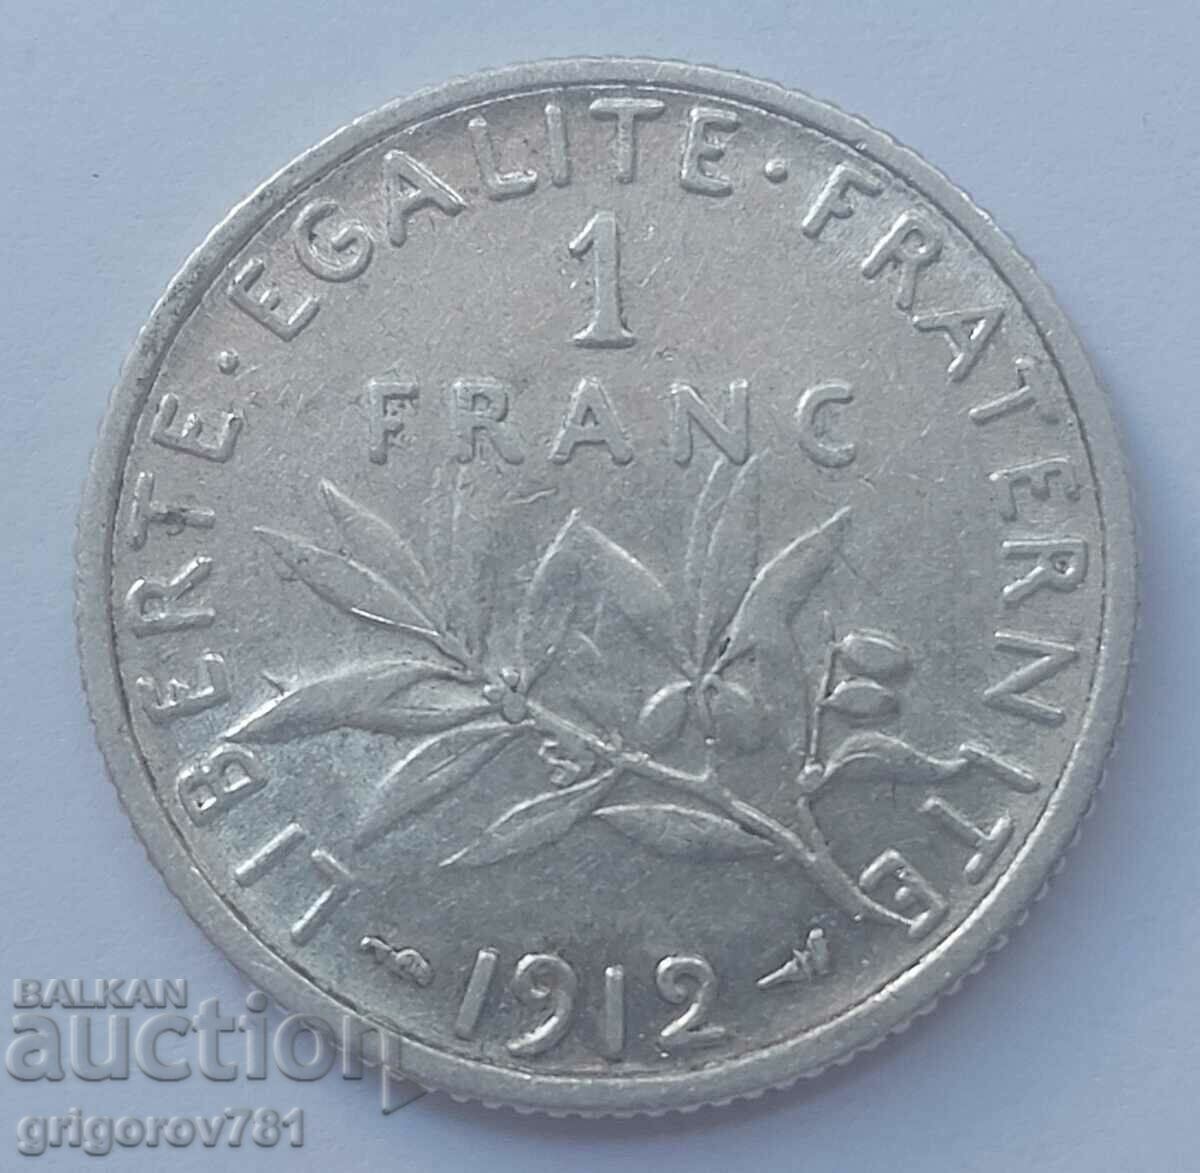 1 franc silver France 1912 - silver coin №1